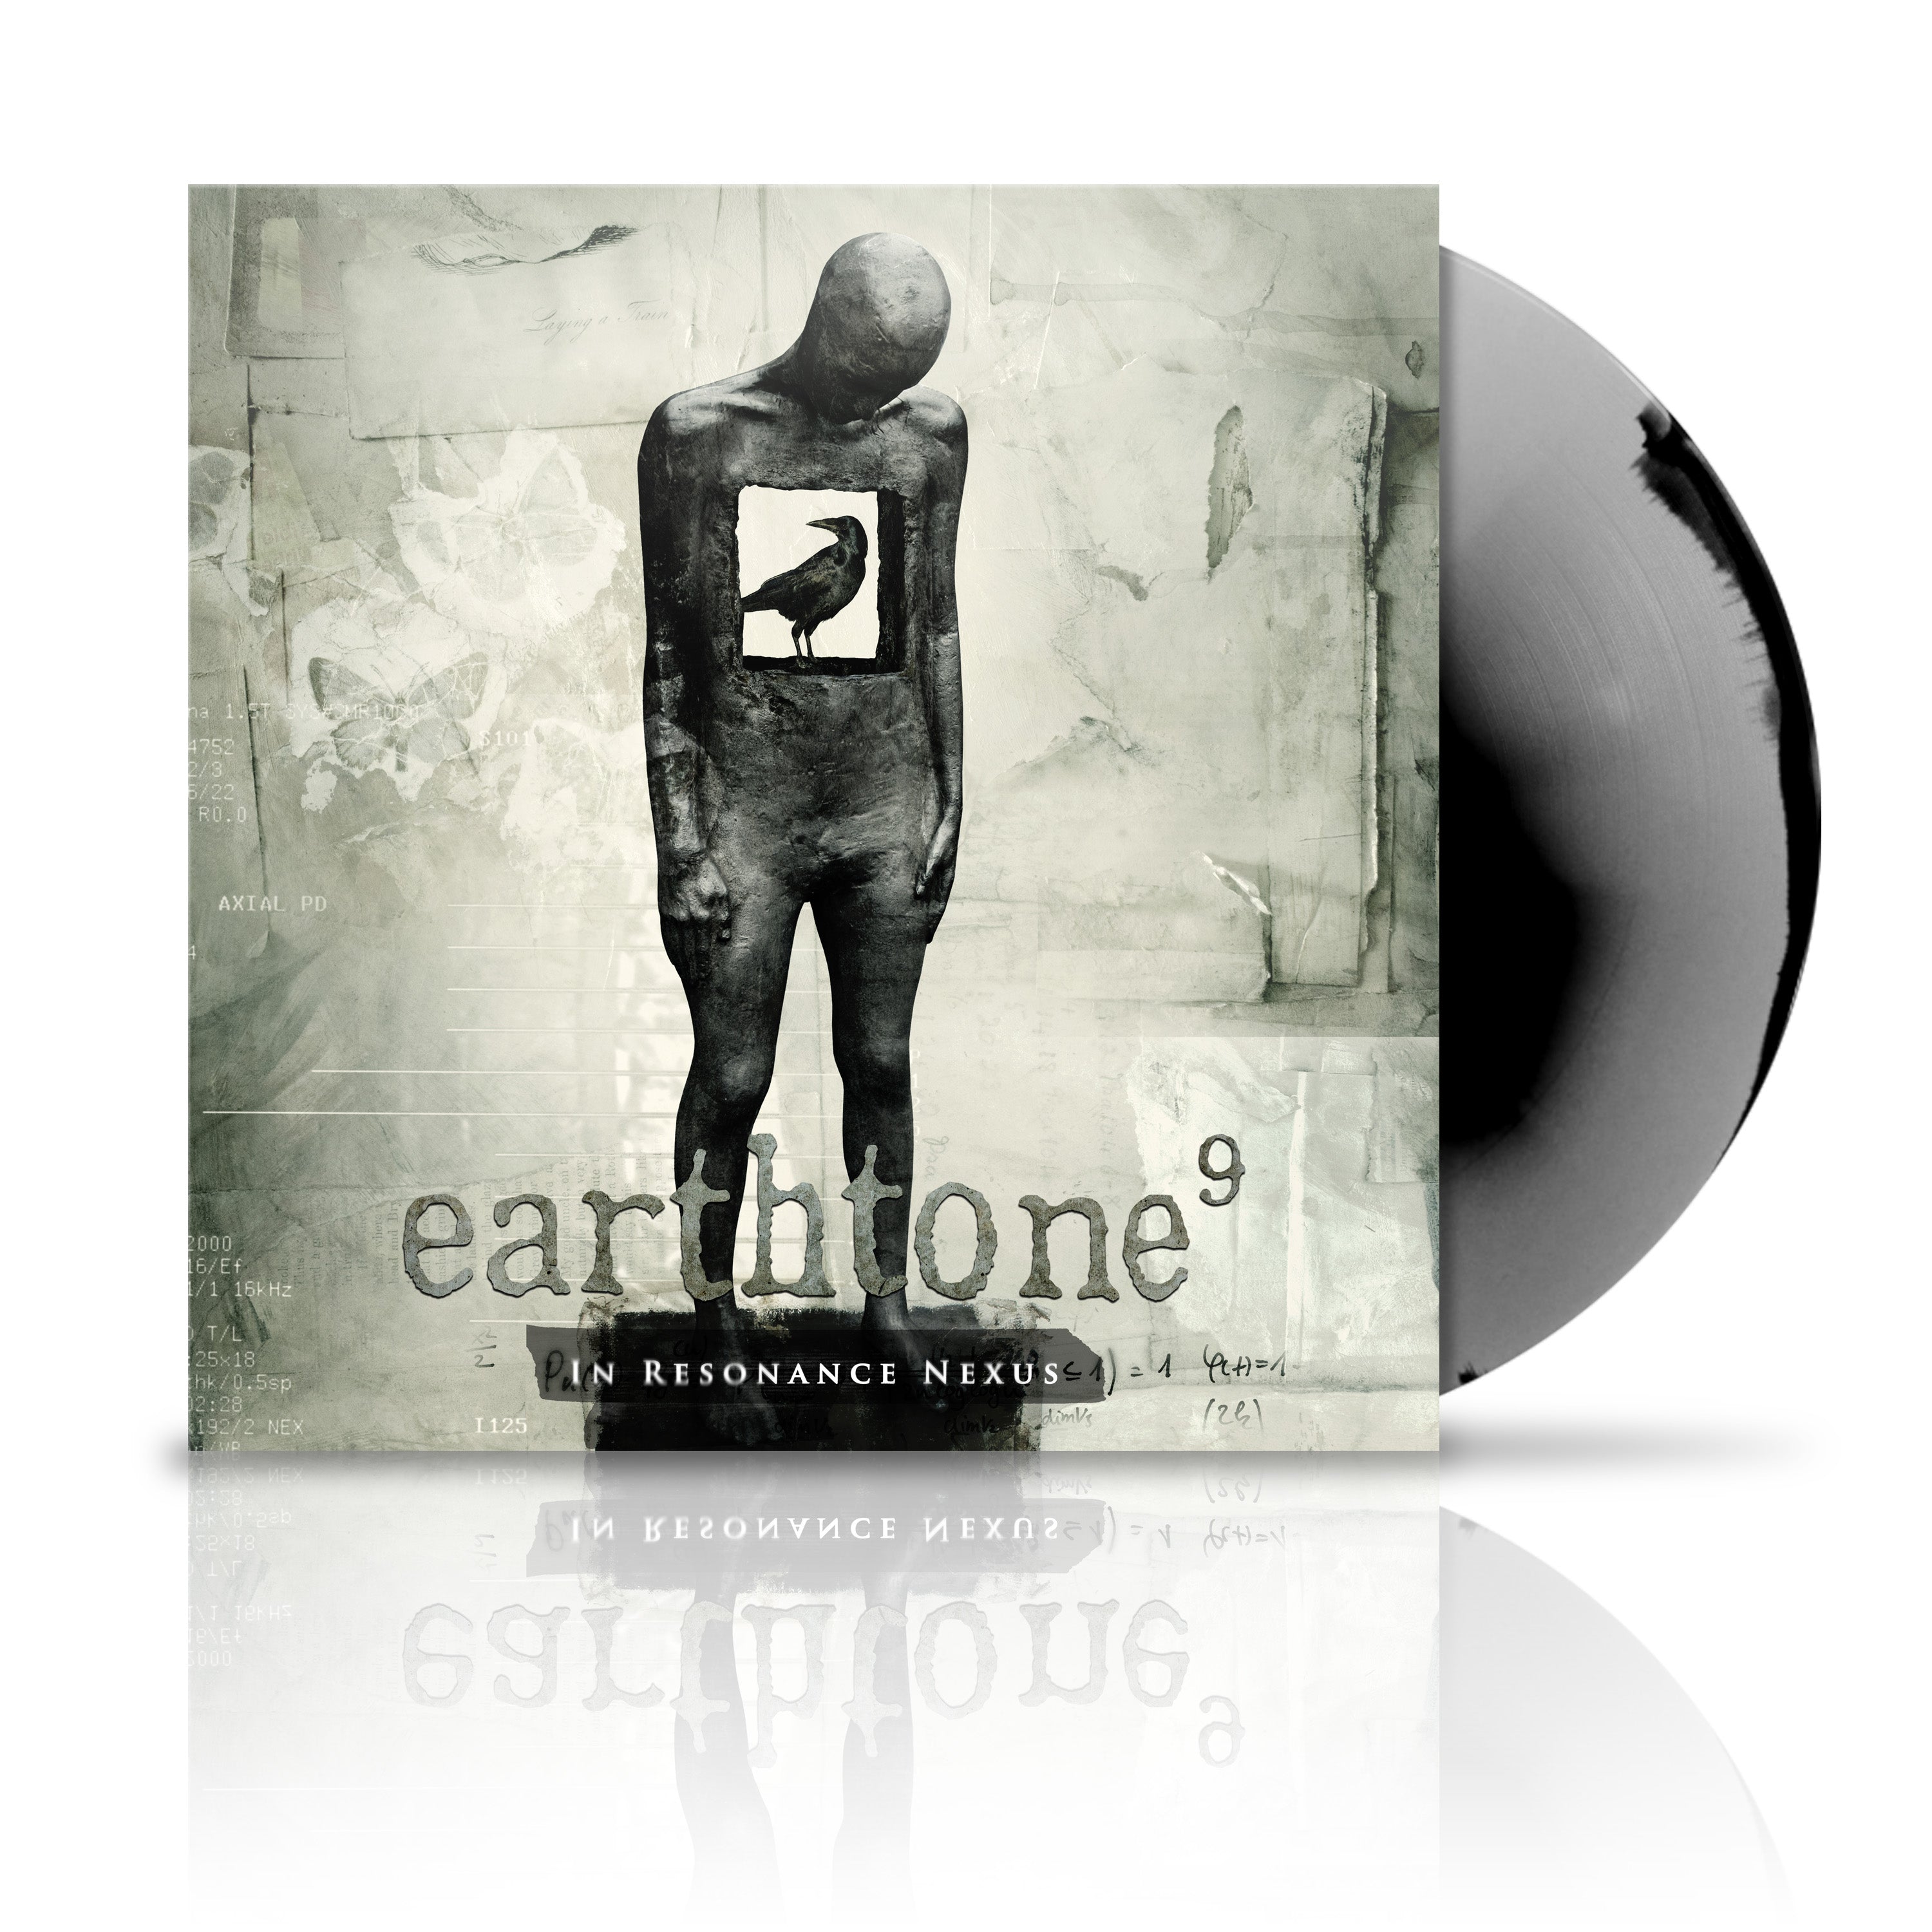 Earthtone9 - In Resonance Nexus: Limited Black & White Swirl Vinyl LP